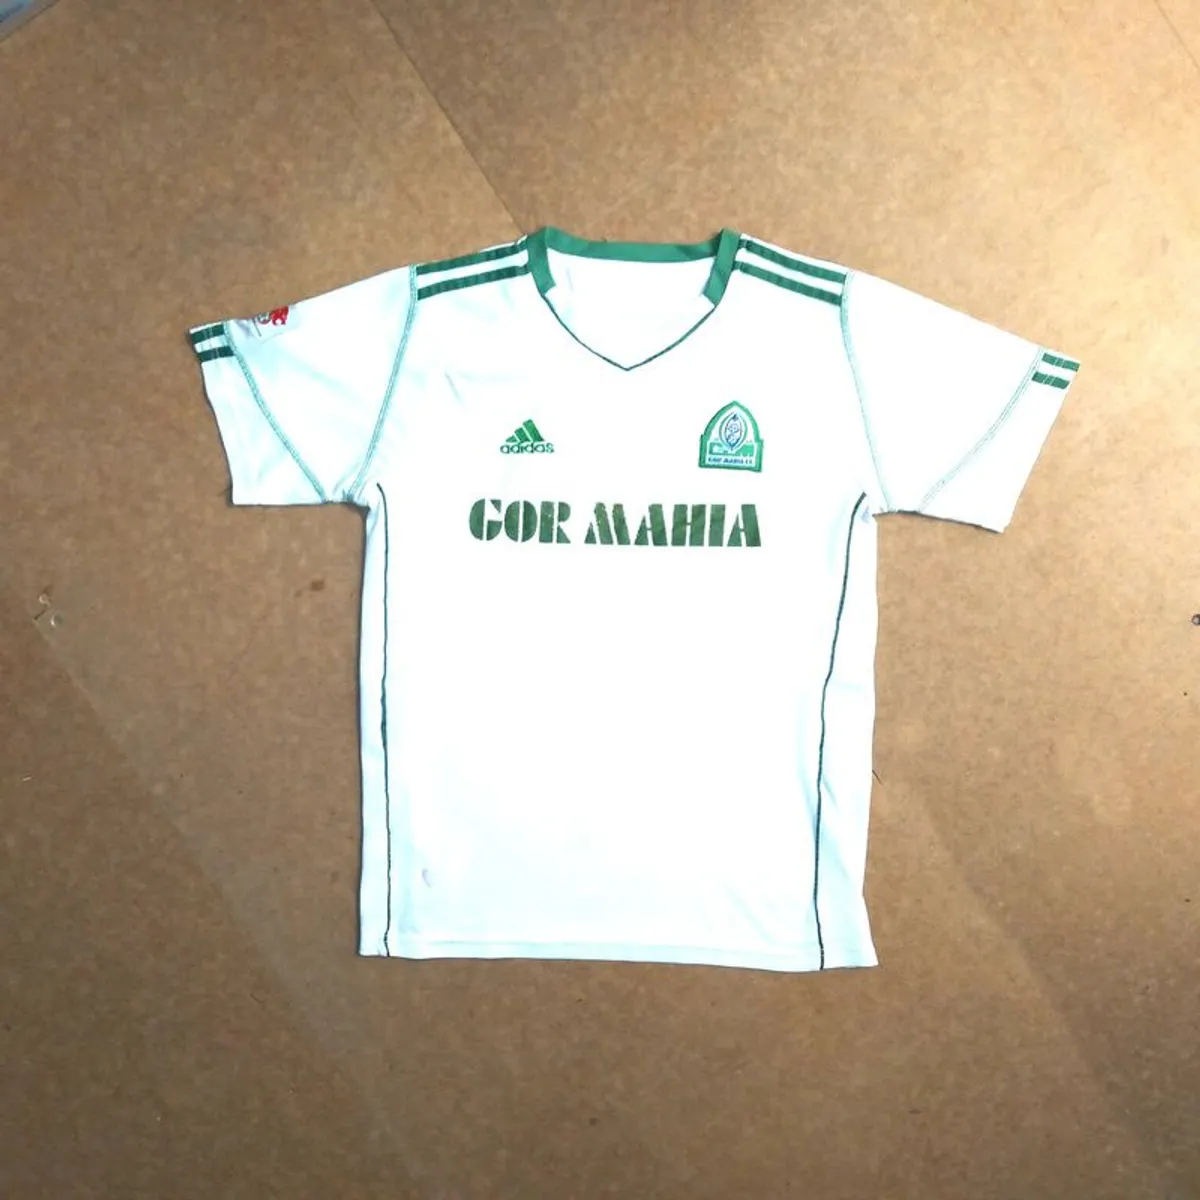 FREE POST Gor Mahia Kenya (S) Shirt Jersey Football Soccer Africa Small - Image 1